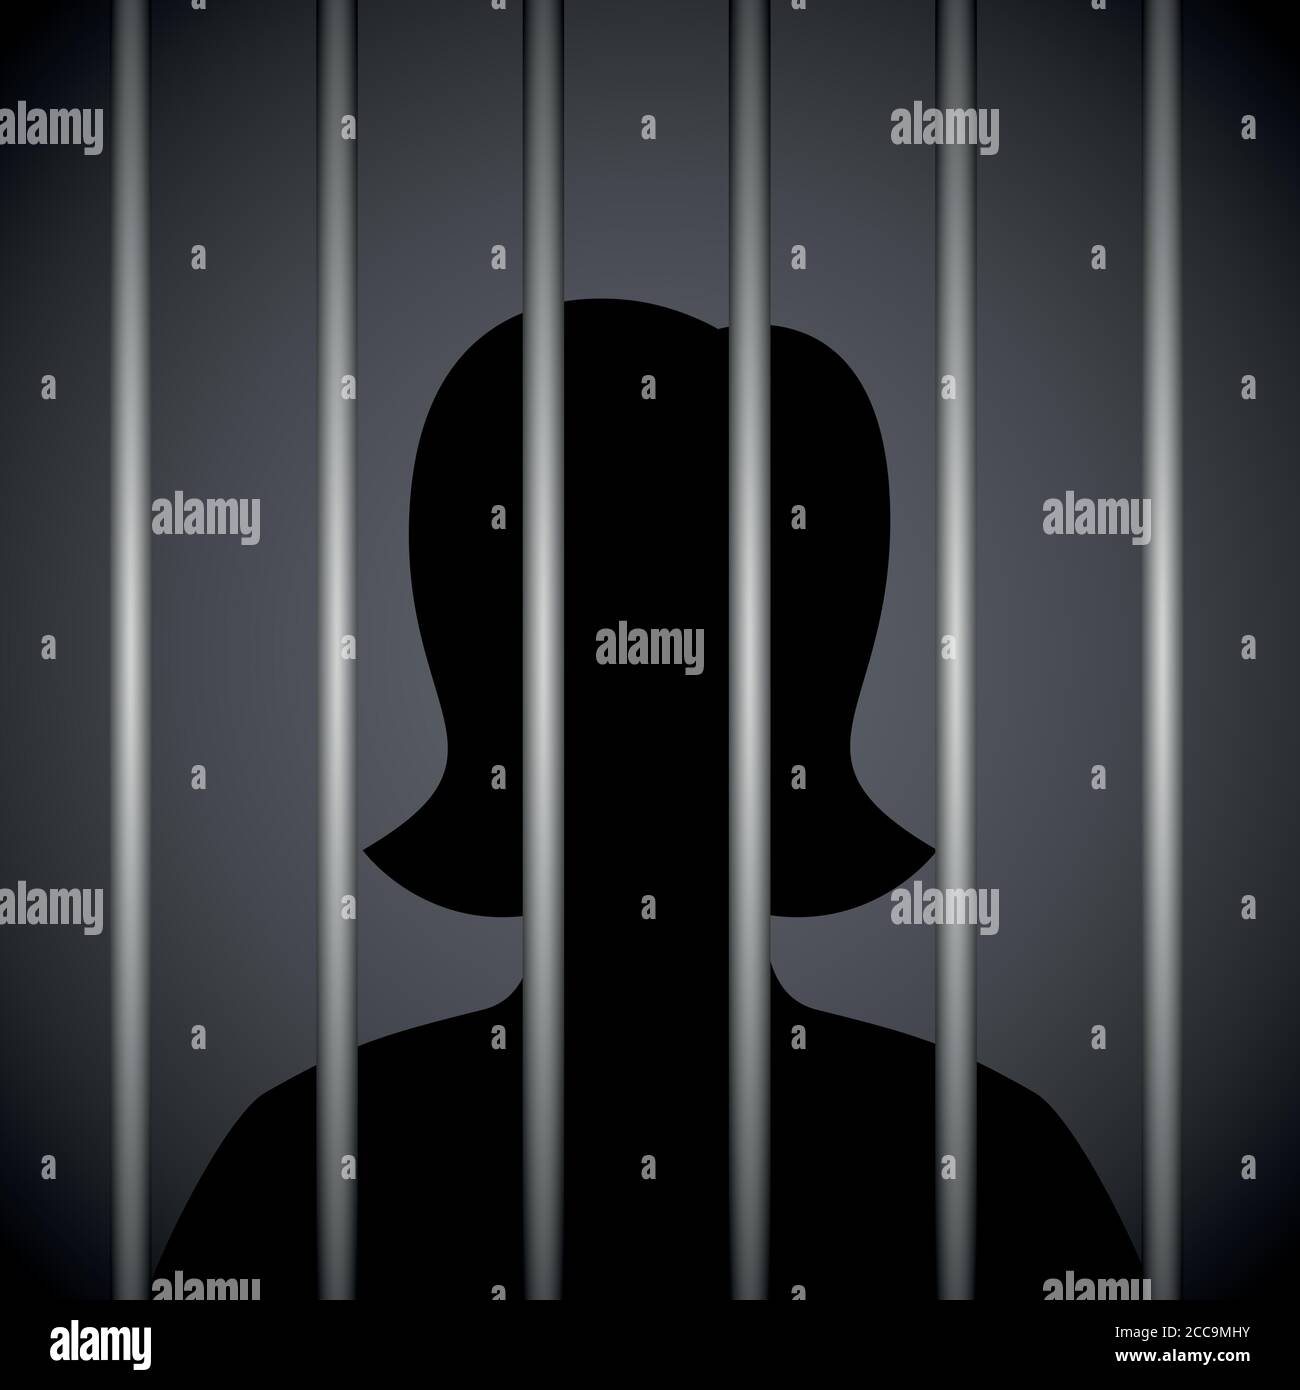 Frau in einem Gefängnis hinter Gefängnisstangen Silhouette Vektor-Illustration EPS10 Stock Vektor